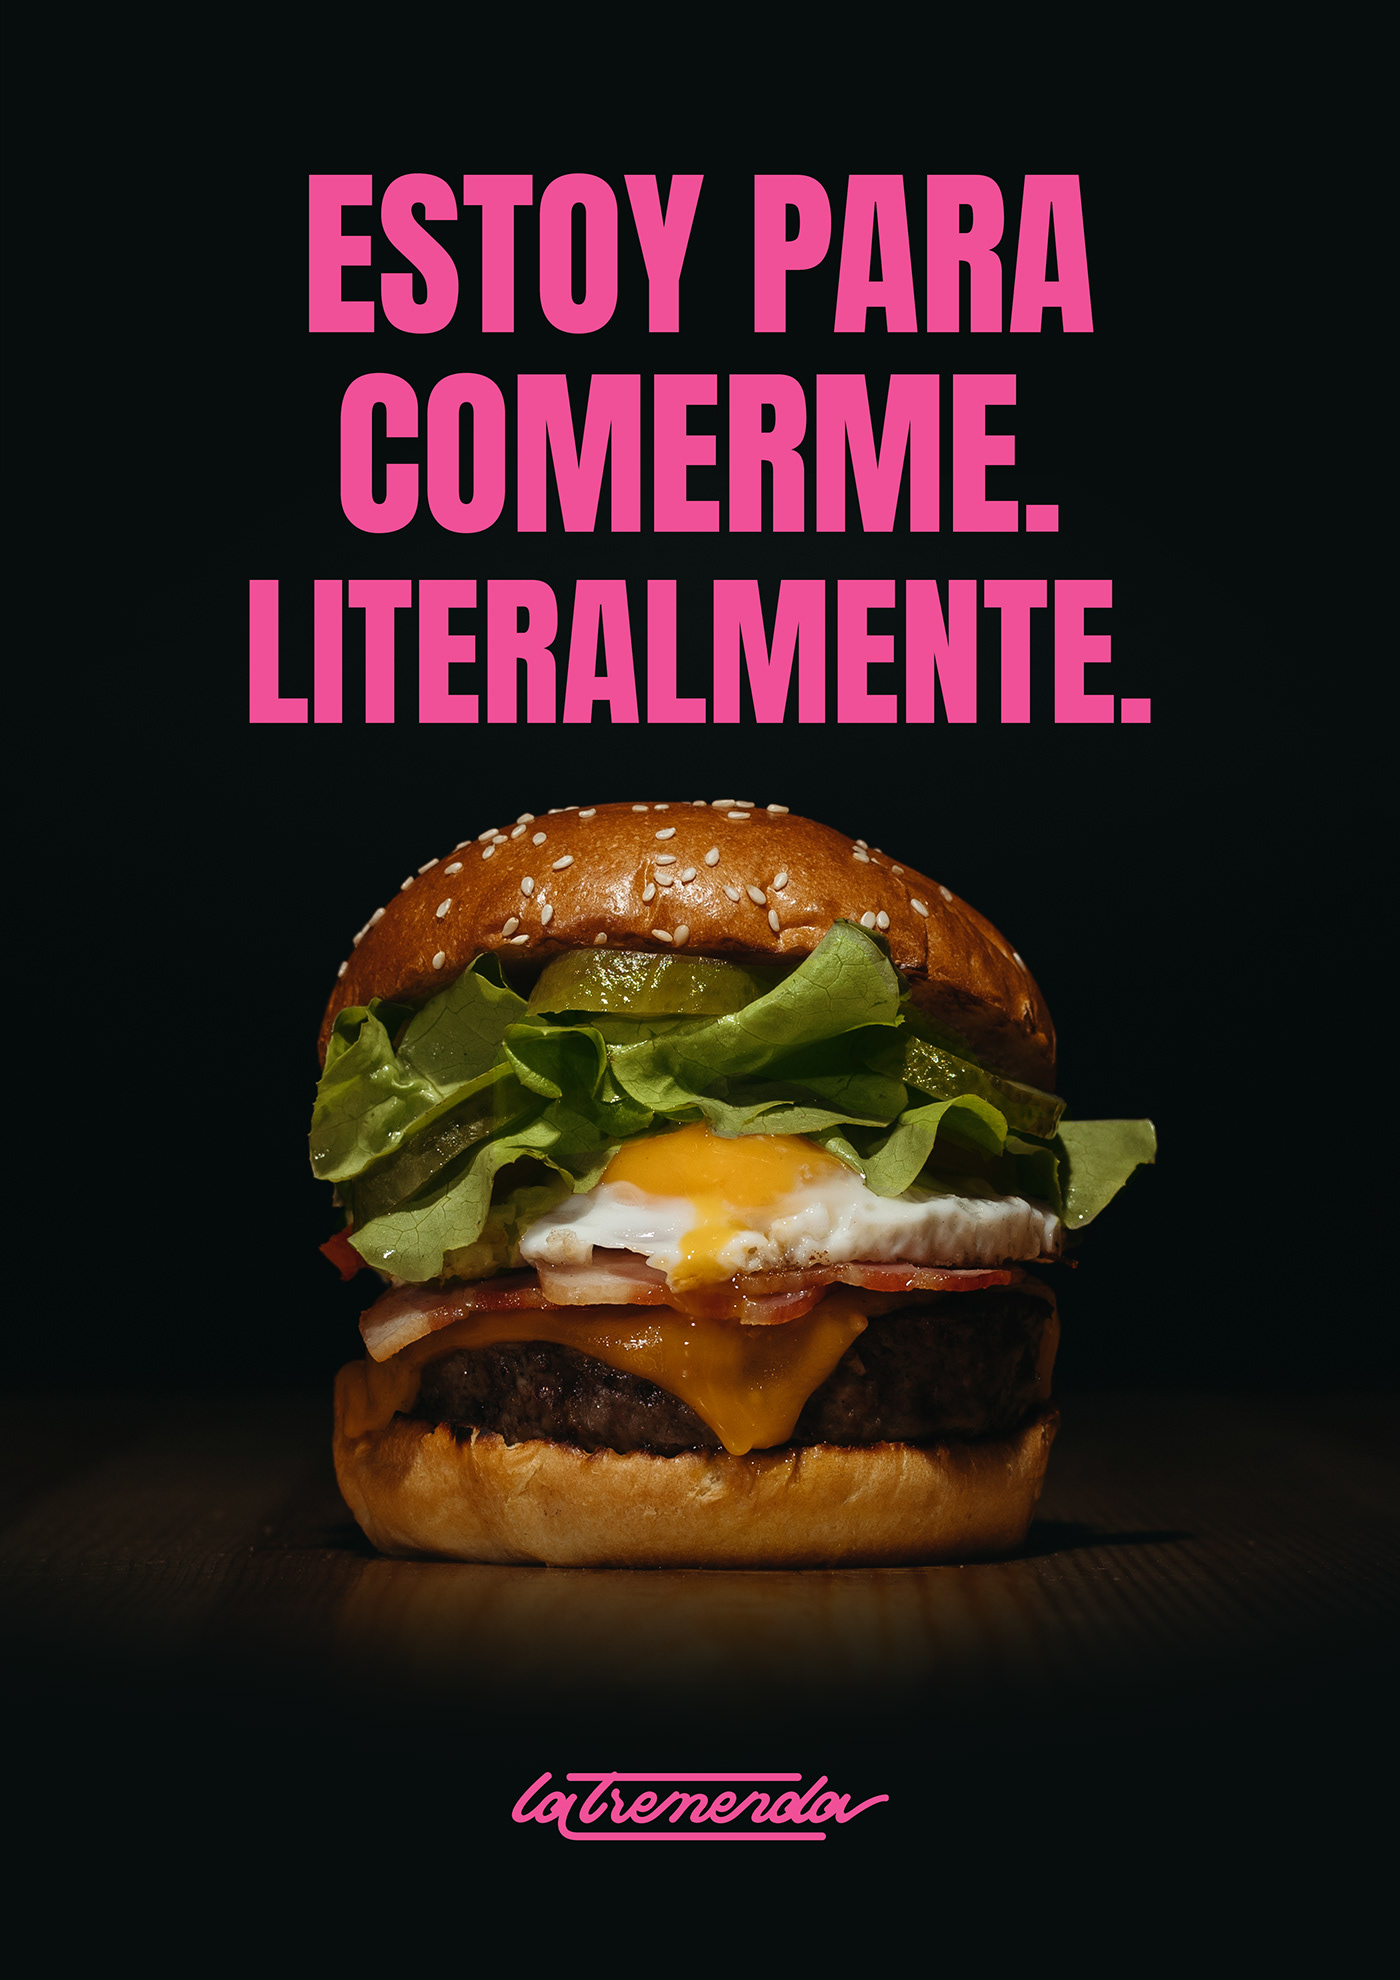 ads Advertising  burger Food  hamburgueseria